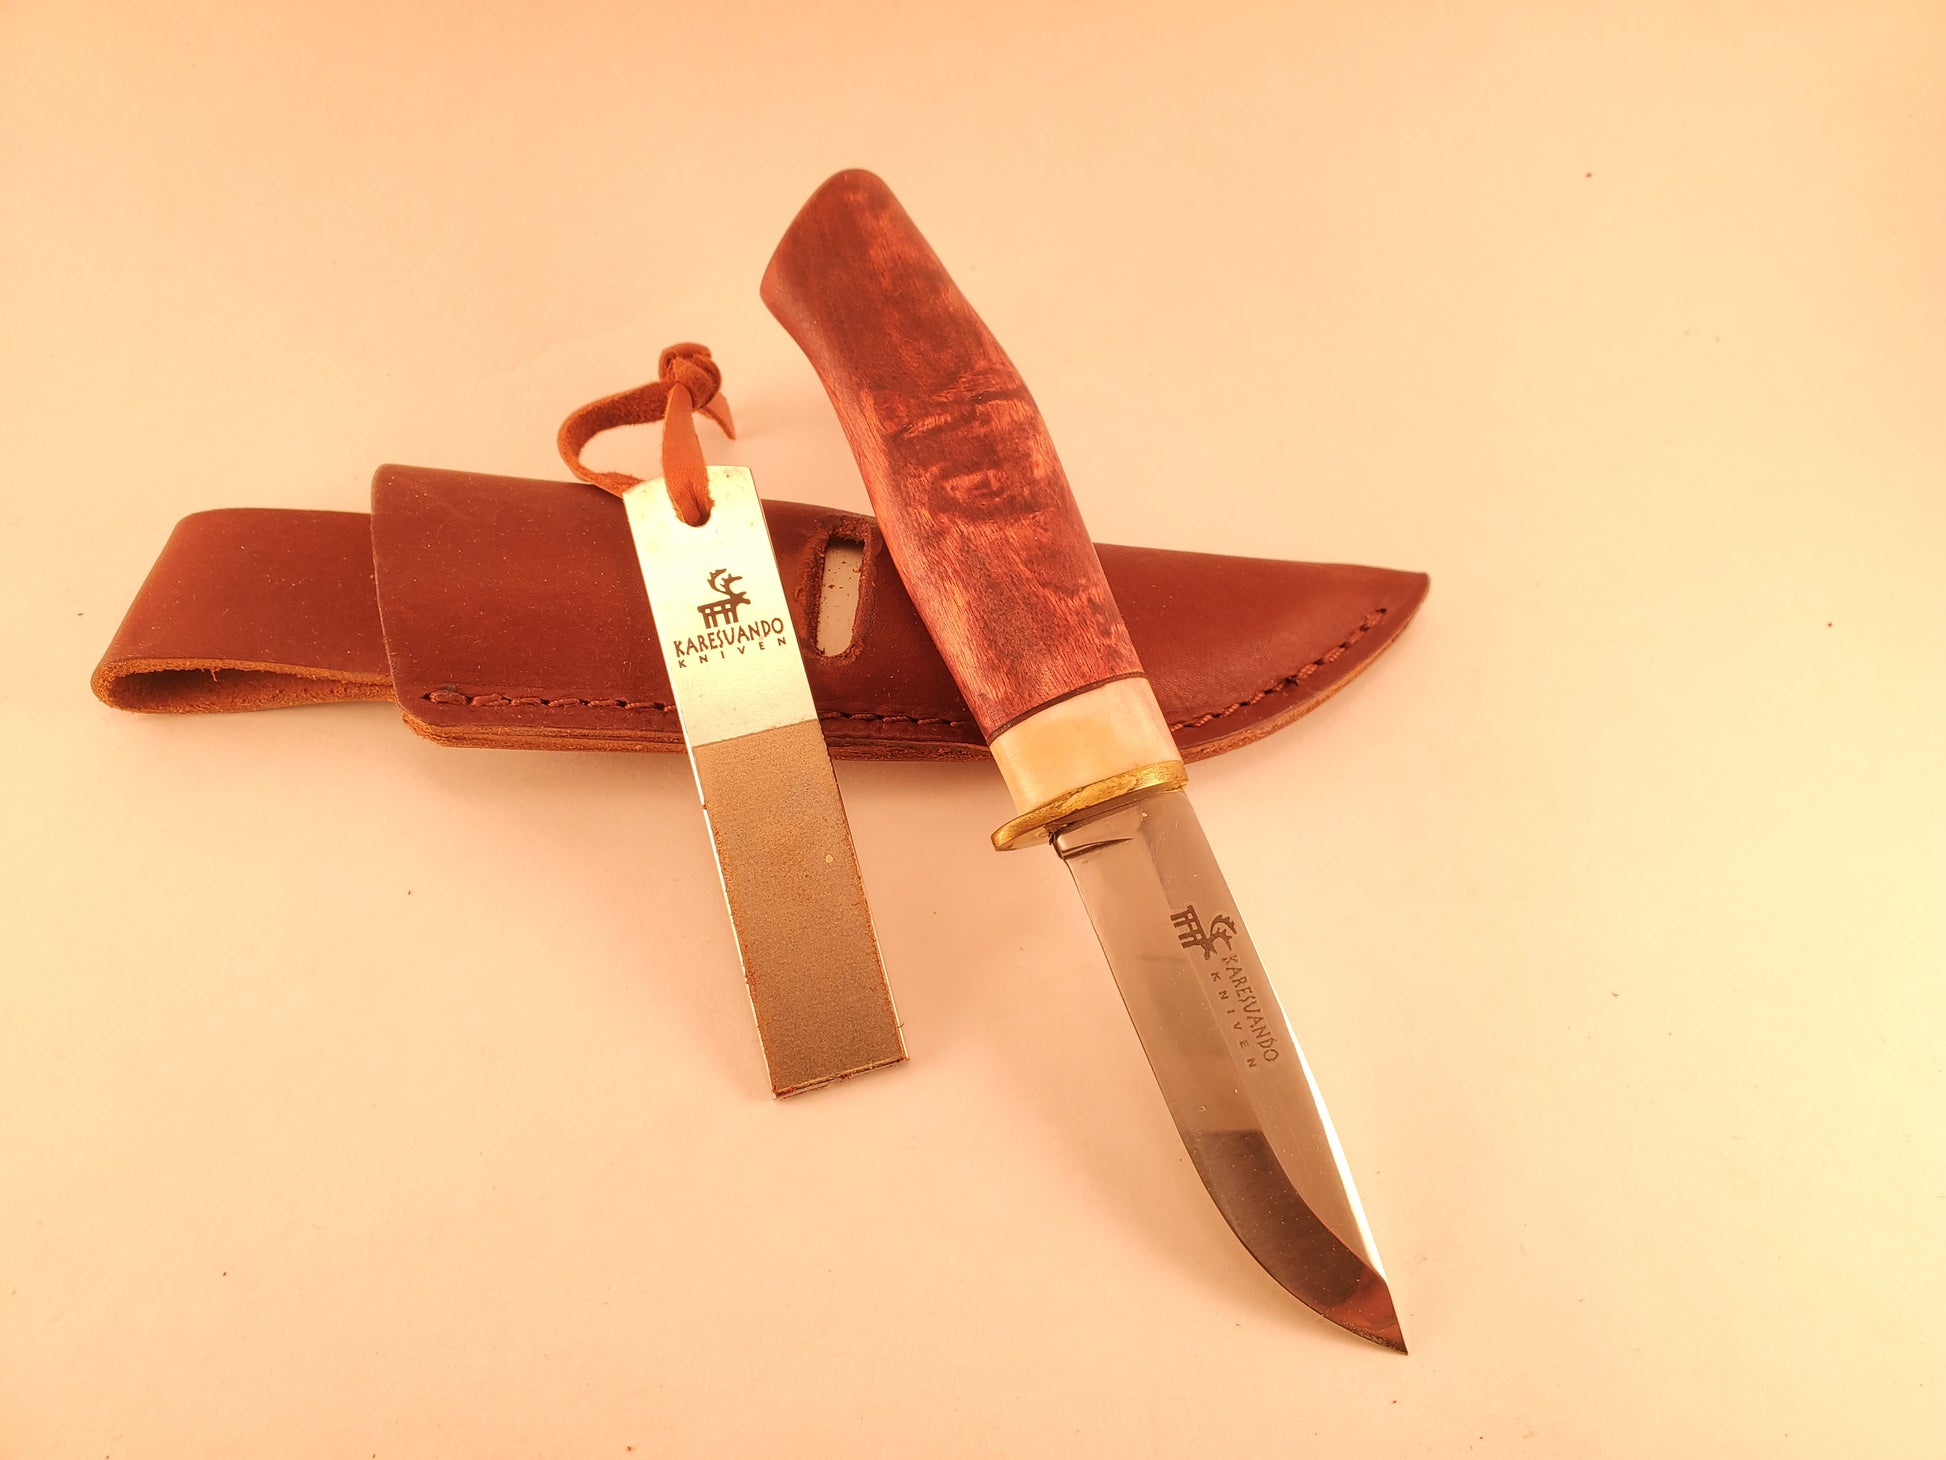 Karesuando Outdoor Hunting Bushcraft Knife Puukko